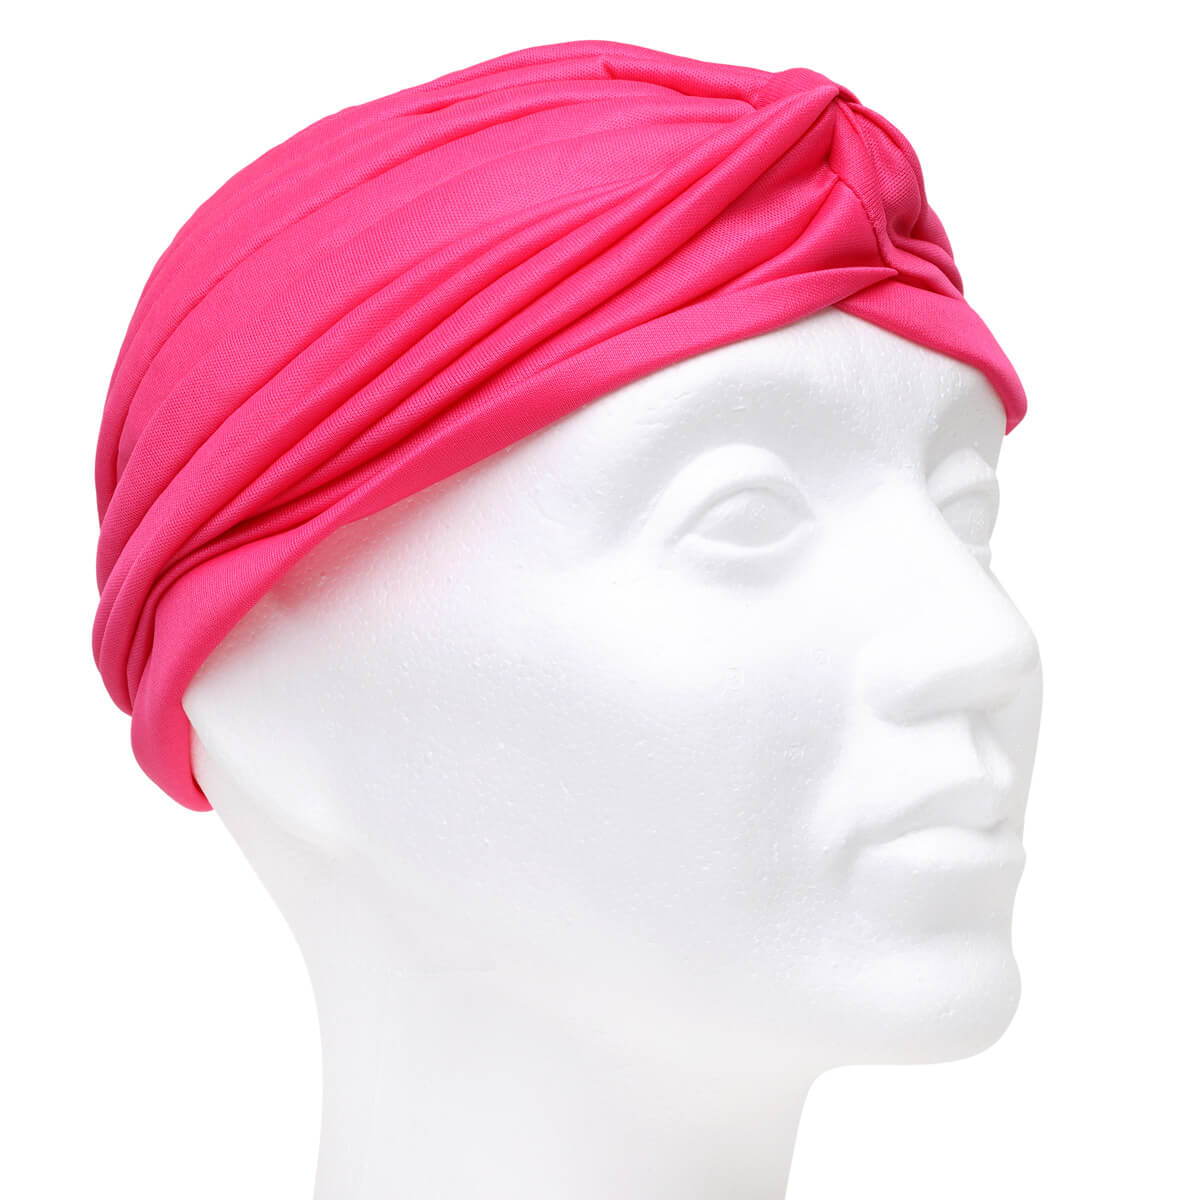 Turban elastic headgear